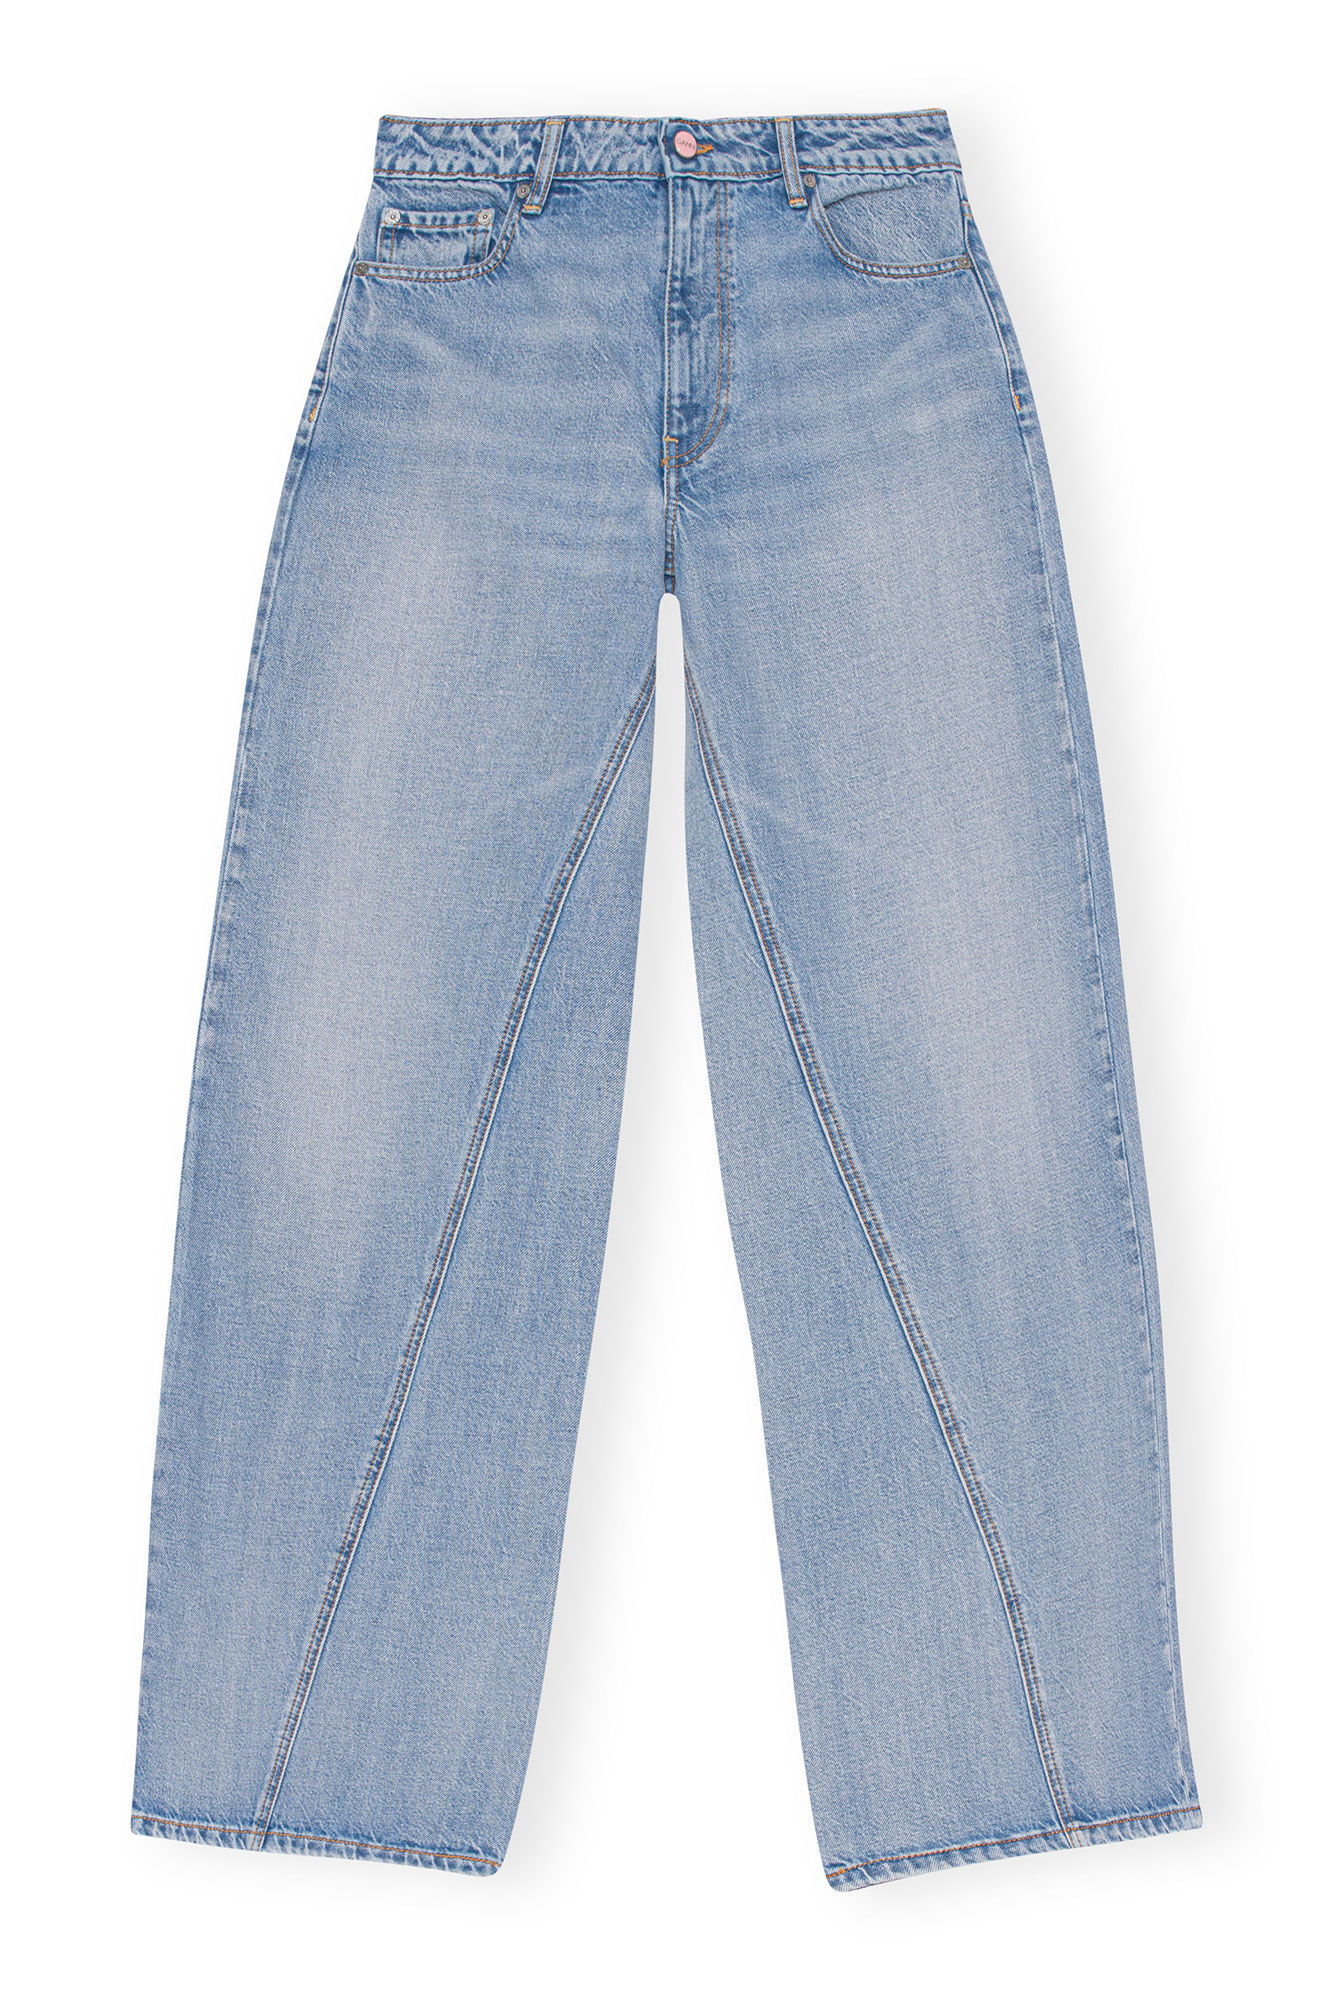 KIDS FASHION Trousers Basic discount 70% Navy Blue Mango jeans 